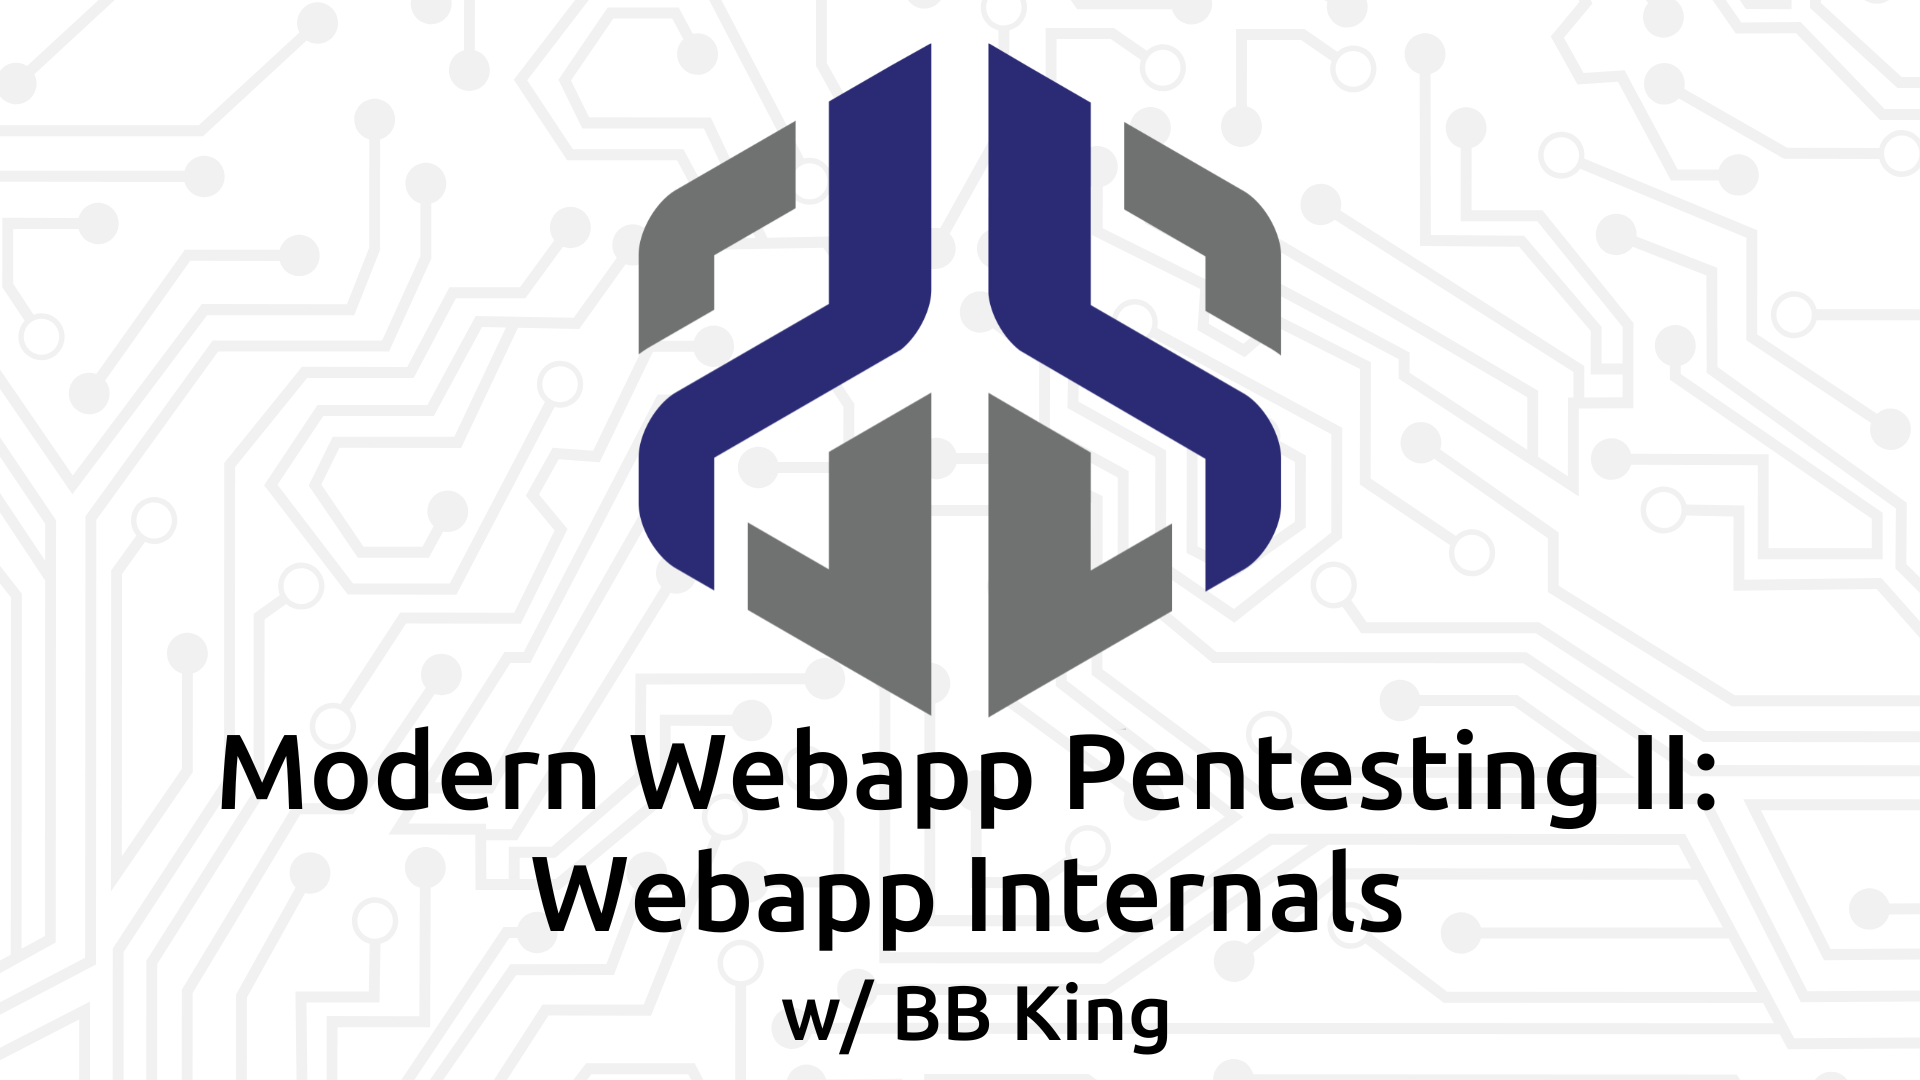 Modern Webapp Pentesting II: Webapp Internals w/ BB King